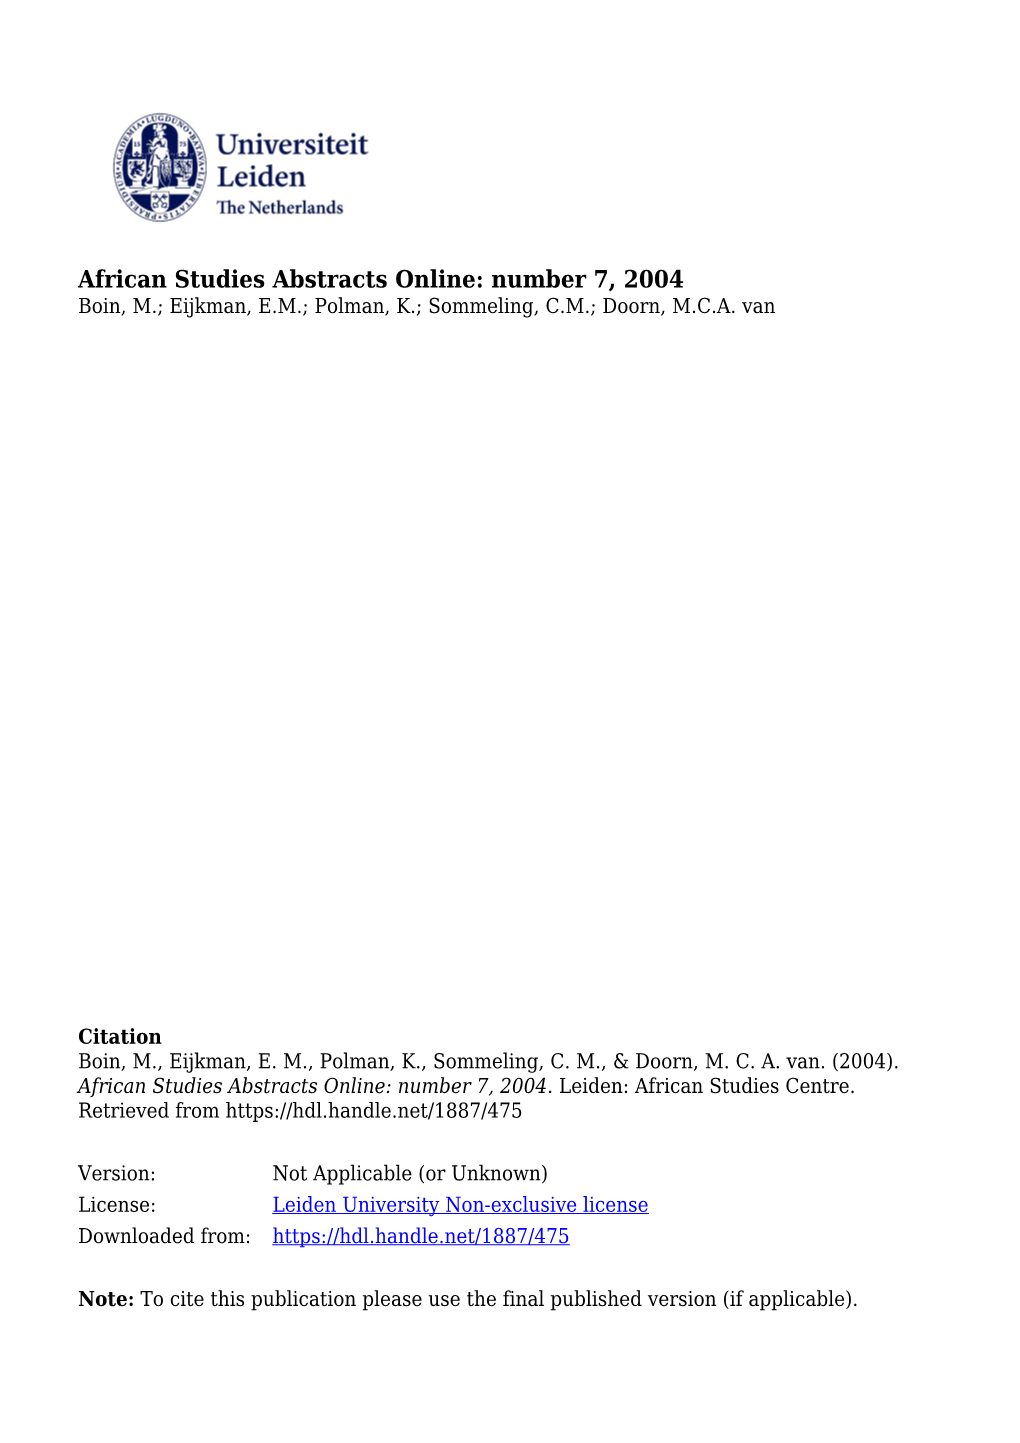 African Studies Abstracts Online: Number 7, 2004 Boin, M.; Eijkman, E.M.; Polman, K.; Sommeling, C.M.; Doorn, M.C.A